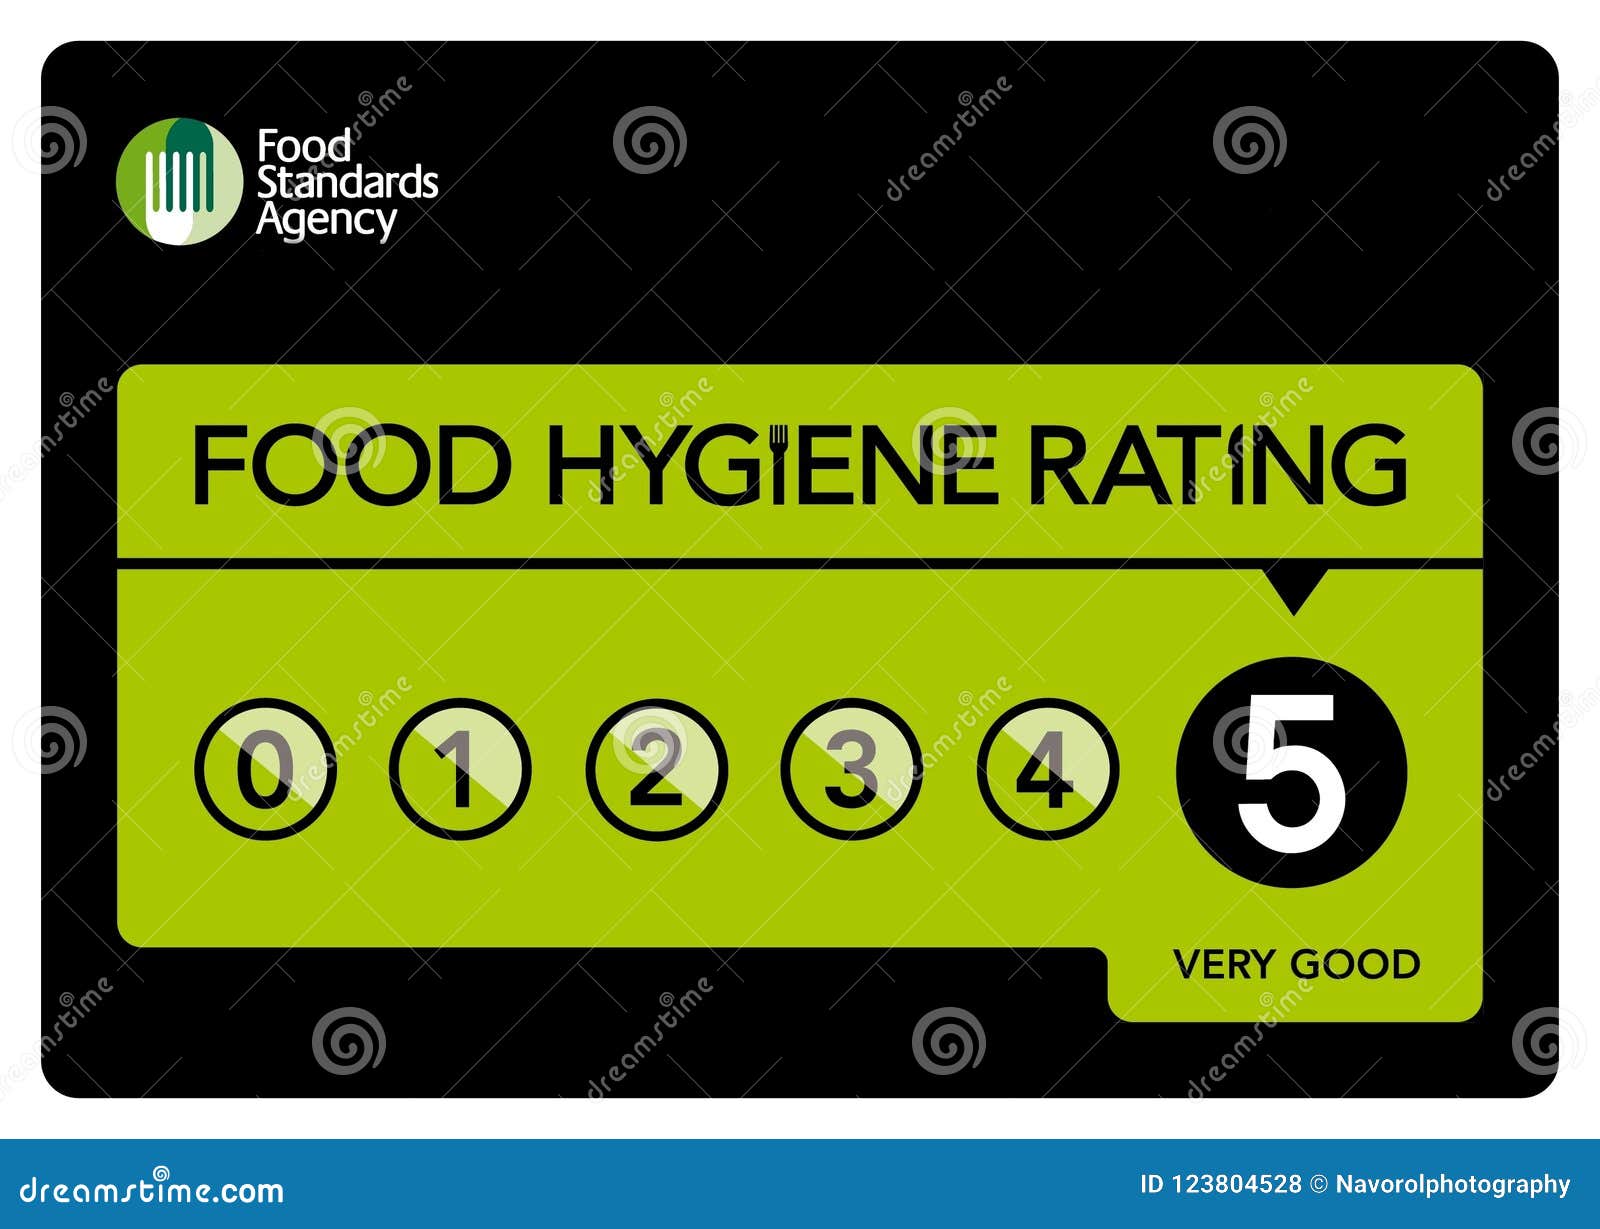 food hygiene rating 5